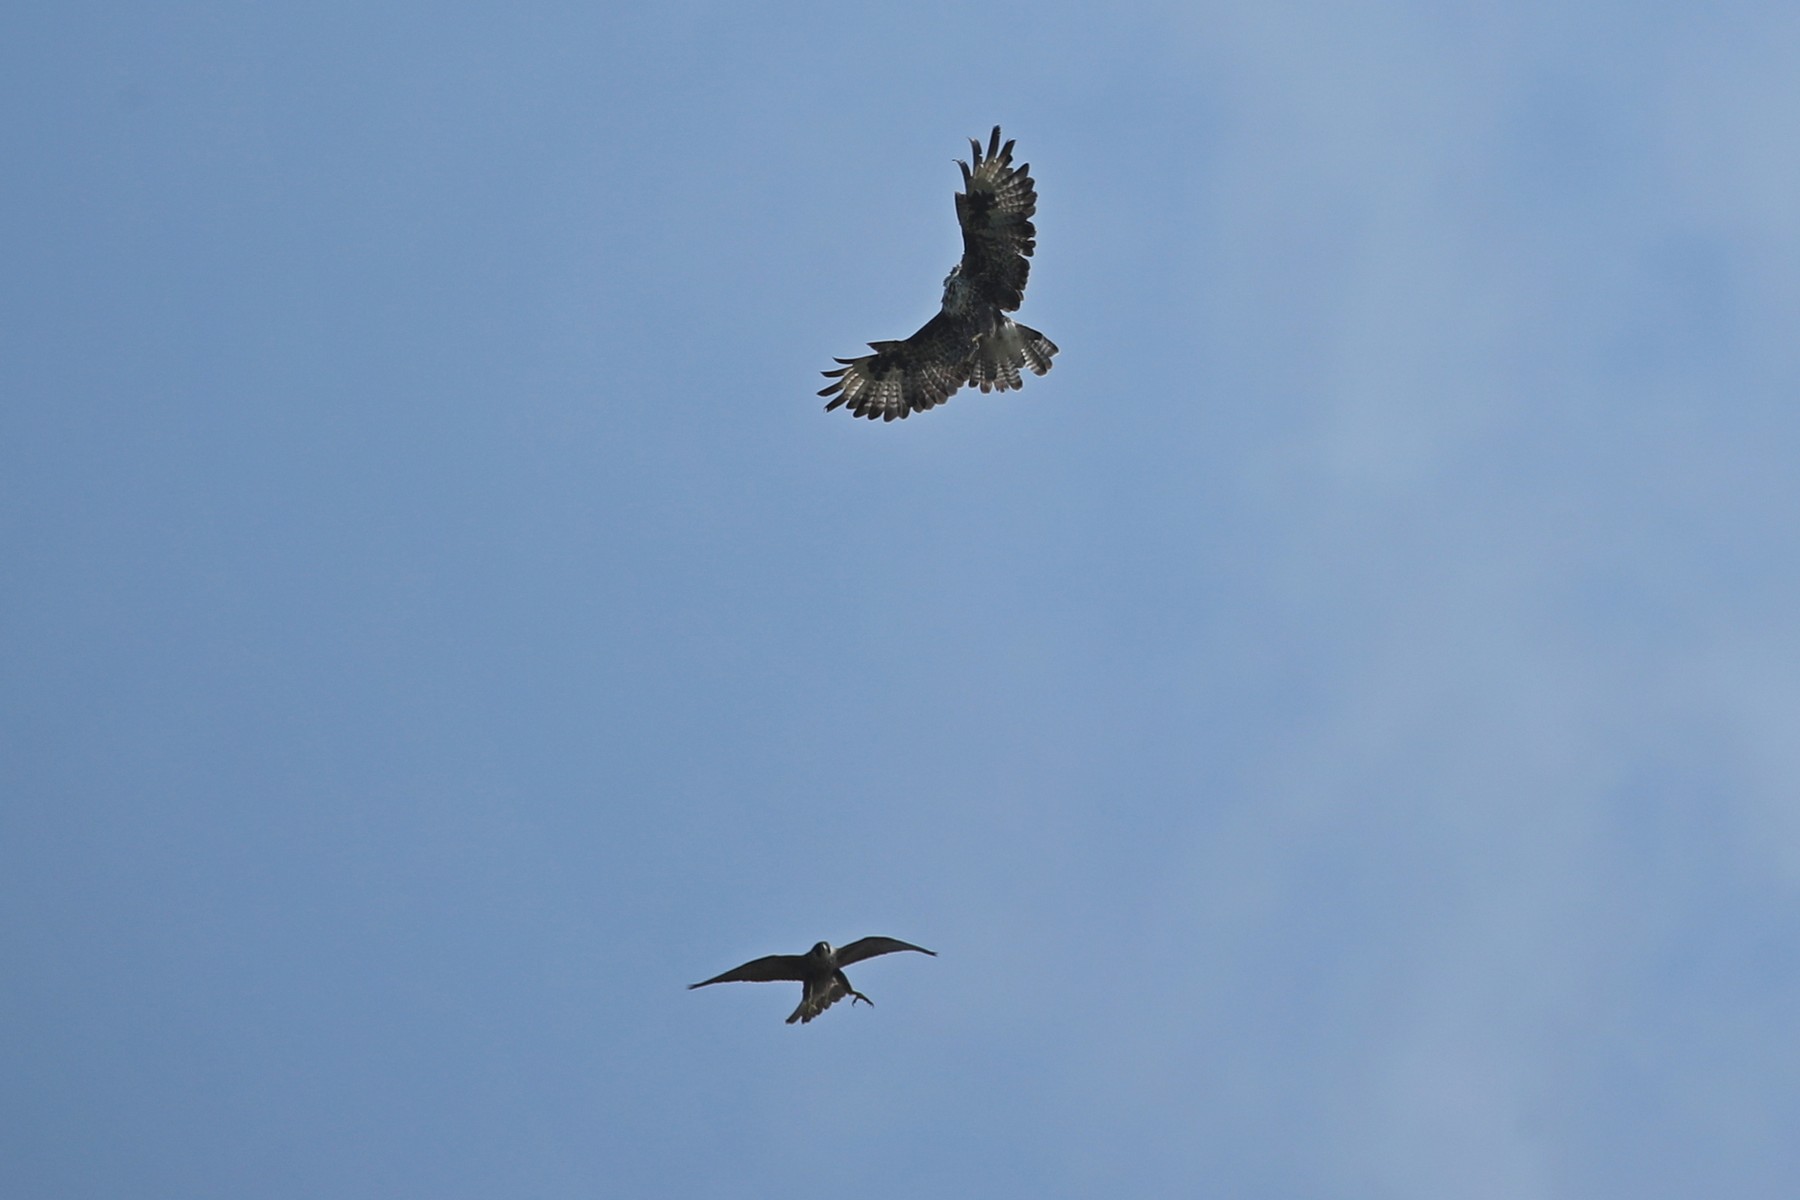 Falco pellegrino (Falco peregrinus) vs Poiana (Buteo buteo)